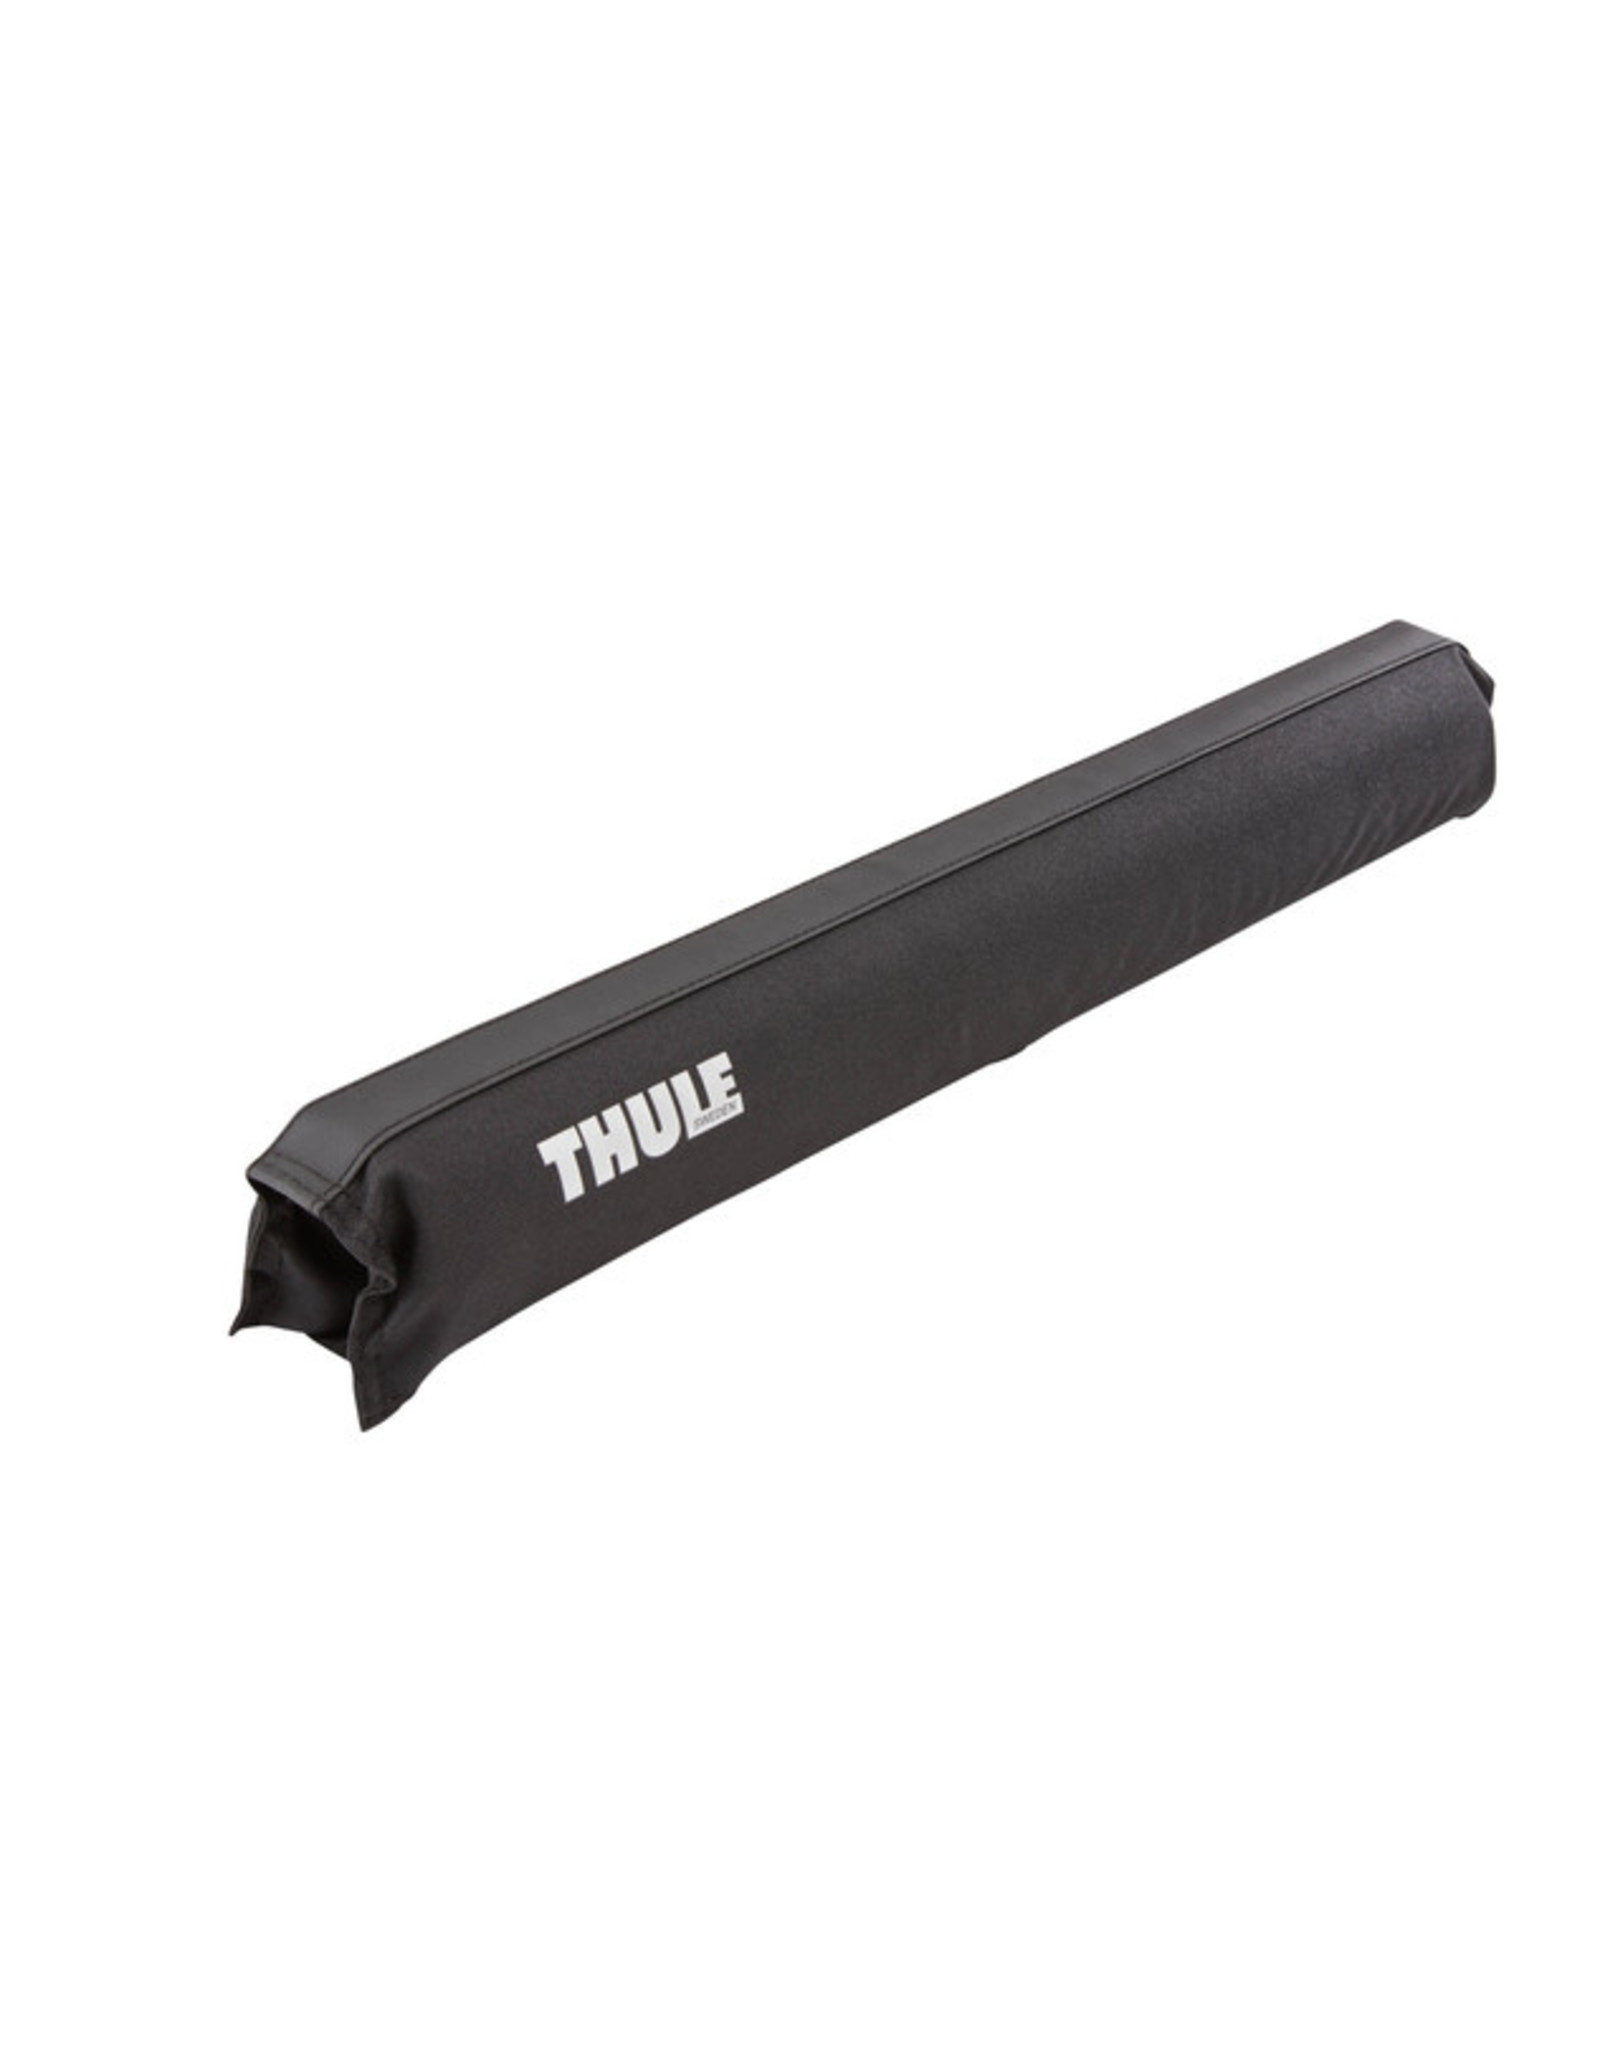 Thule Thule Surf Pads 844000 Narrow L